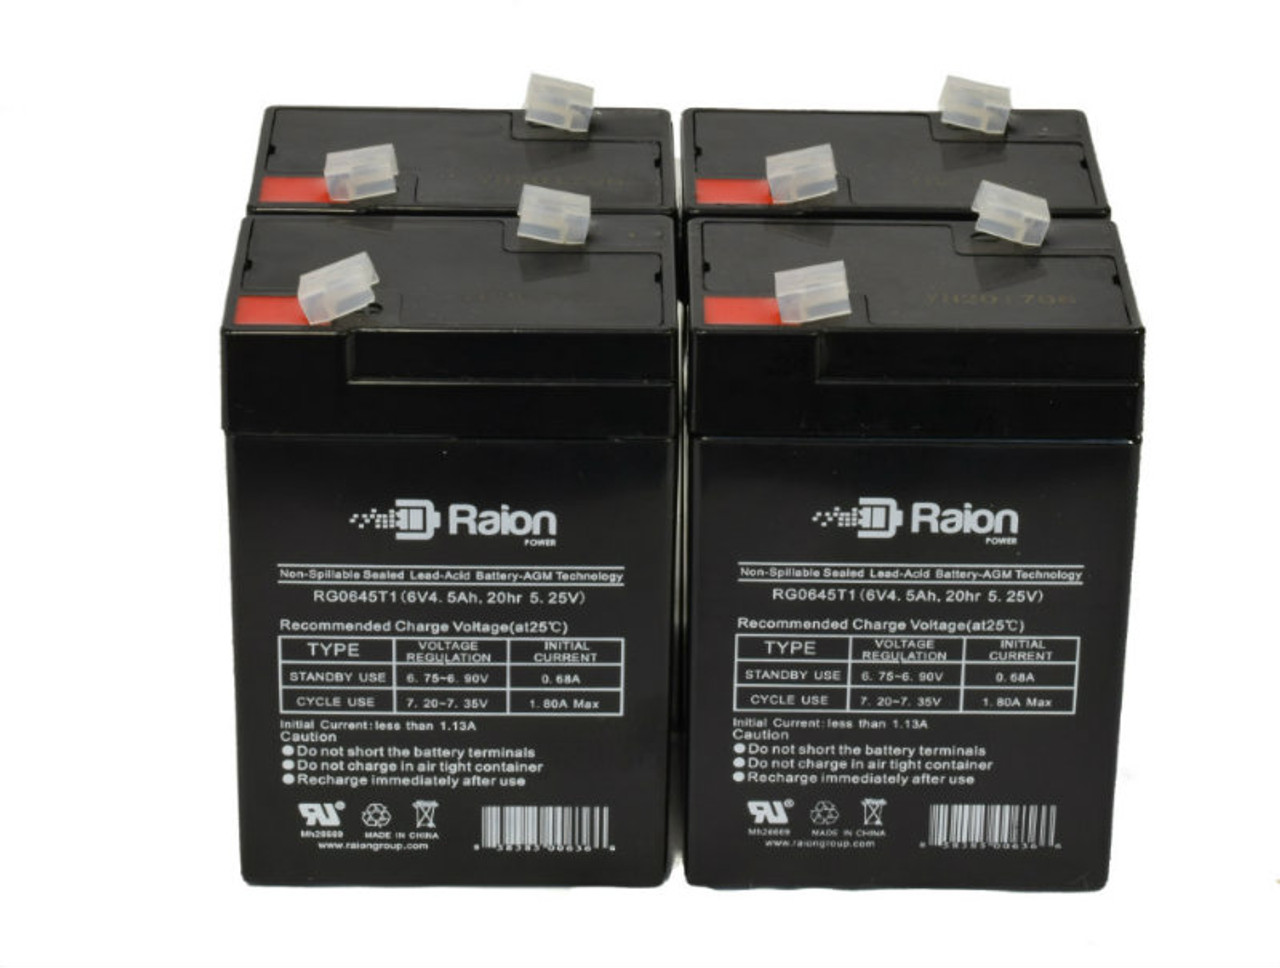 Raion Power 6V 4.5Ah Replacement Emergency Light Battery for Emergi-Lite CSM1 - 4 Pack